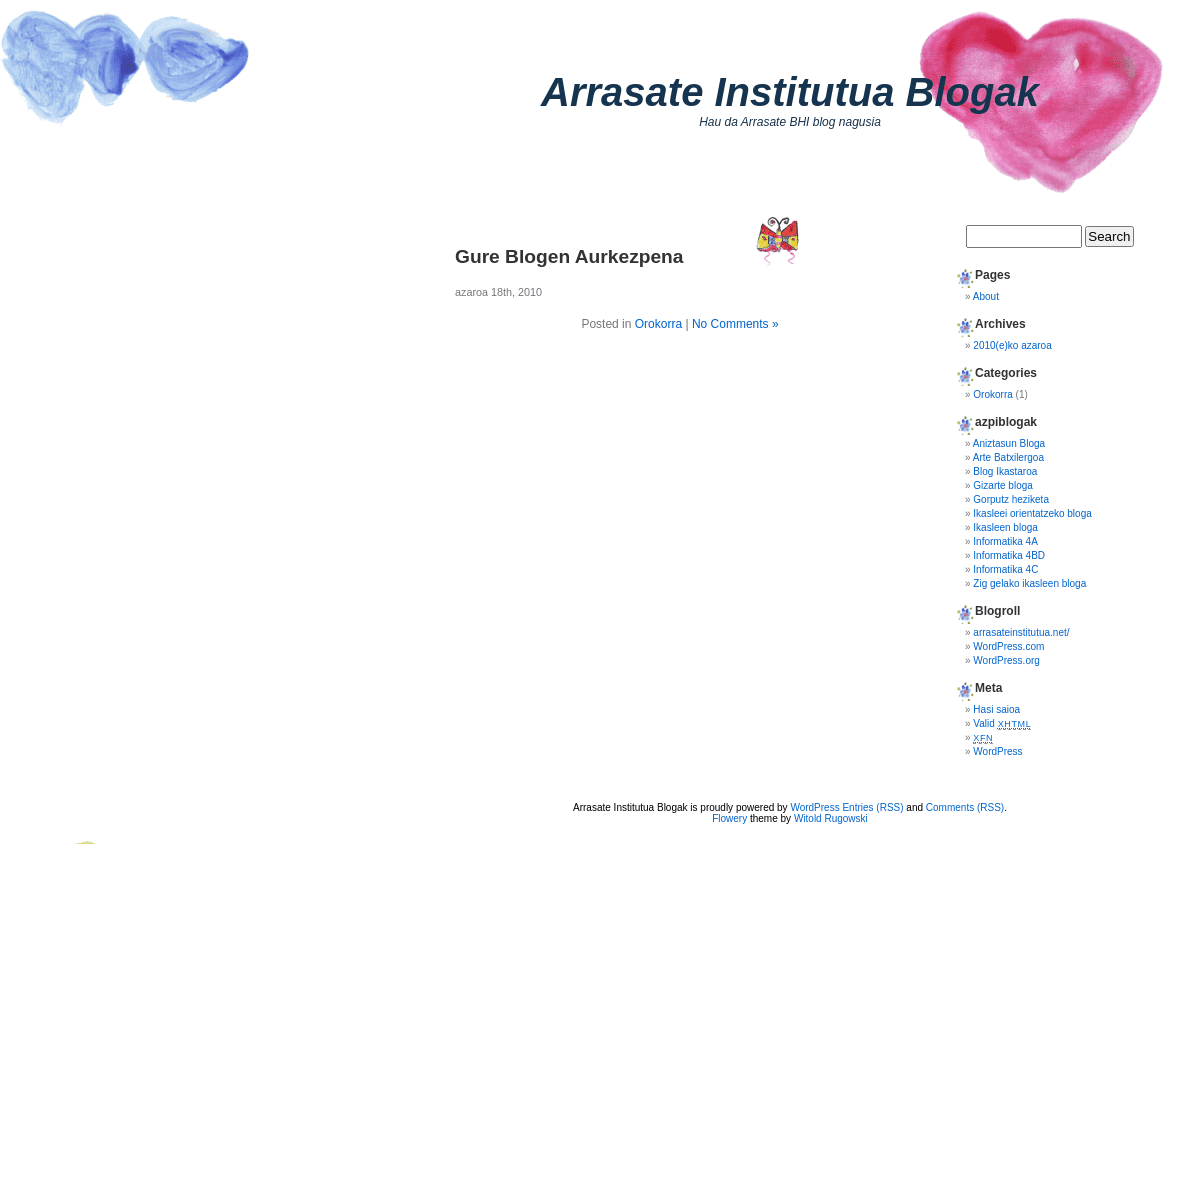 A complete backup of arrasatebhi.net